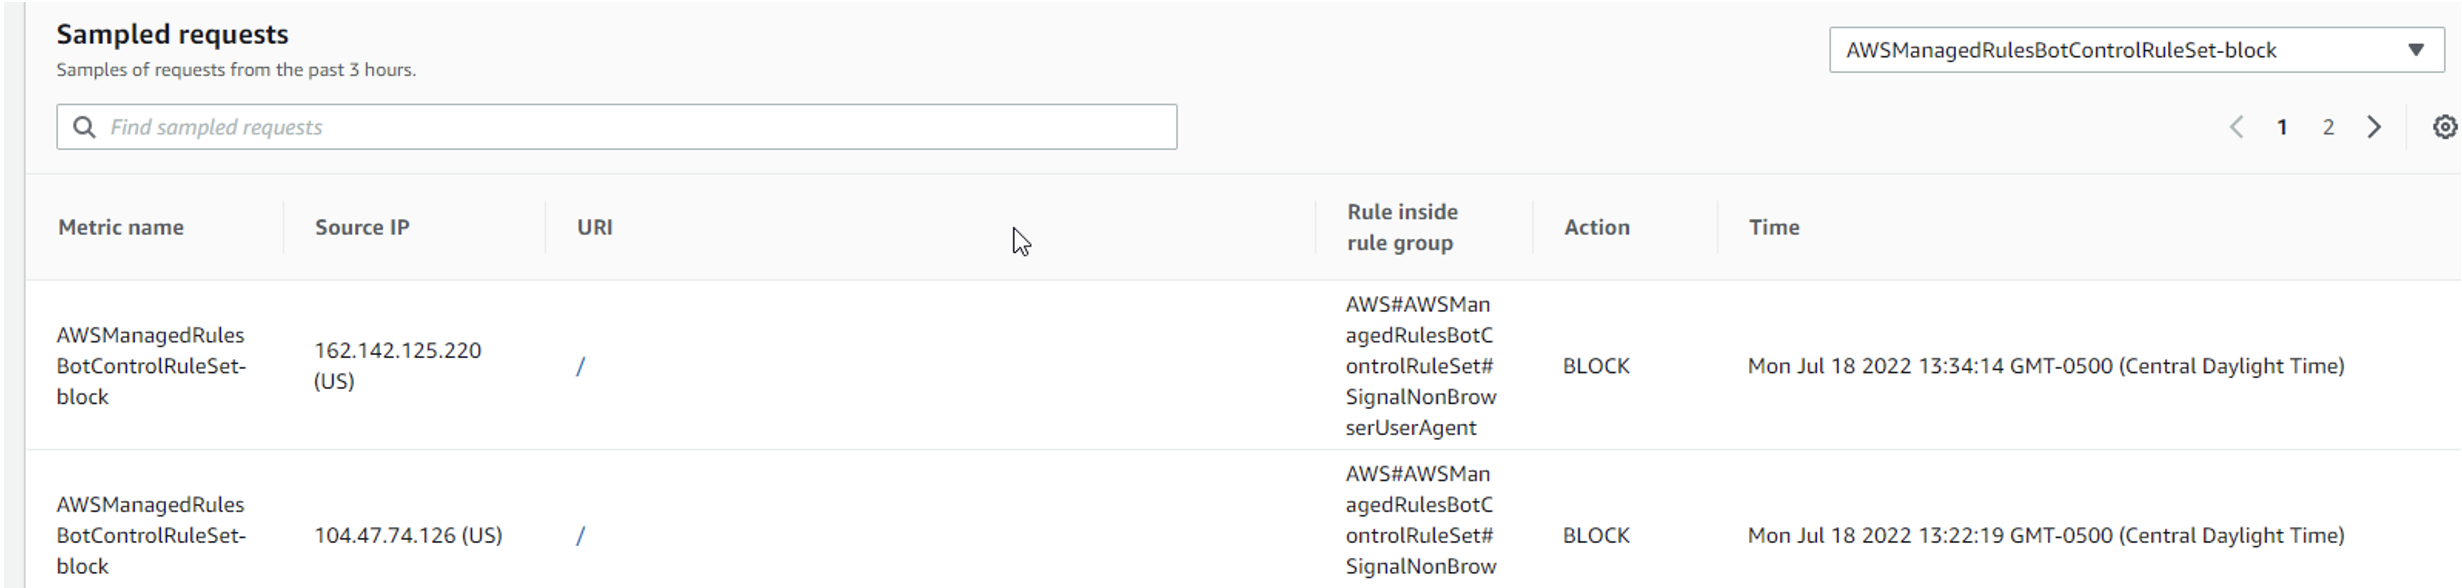 AWS WAF ManagedRulesBotControl Screenshot